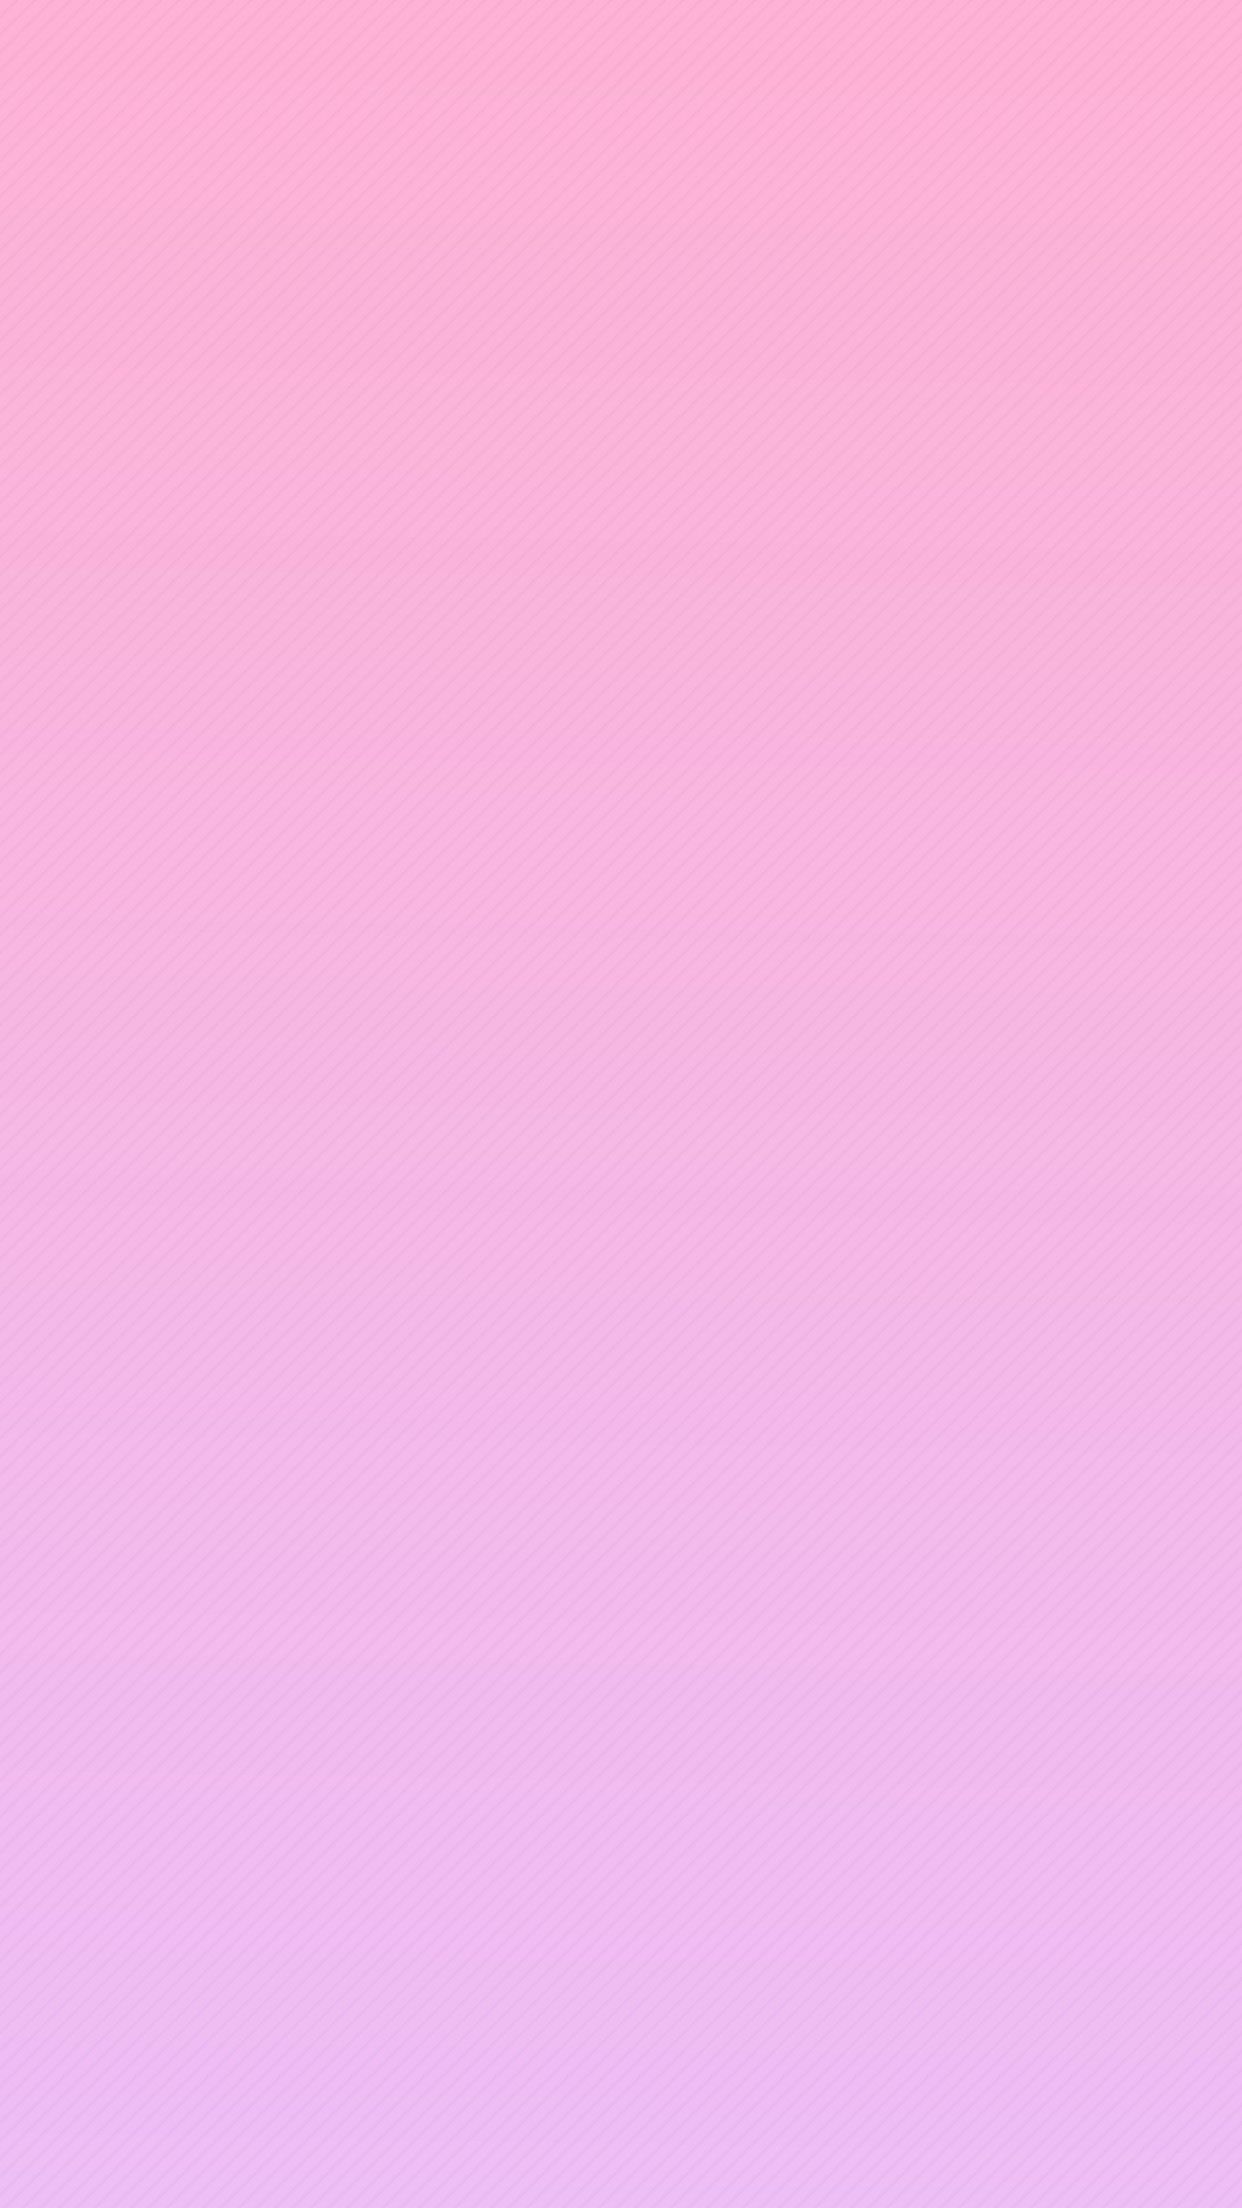 Pink Gradient iPhone Wallpaper Free Pink Gradient iPhone Background